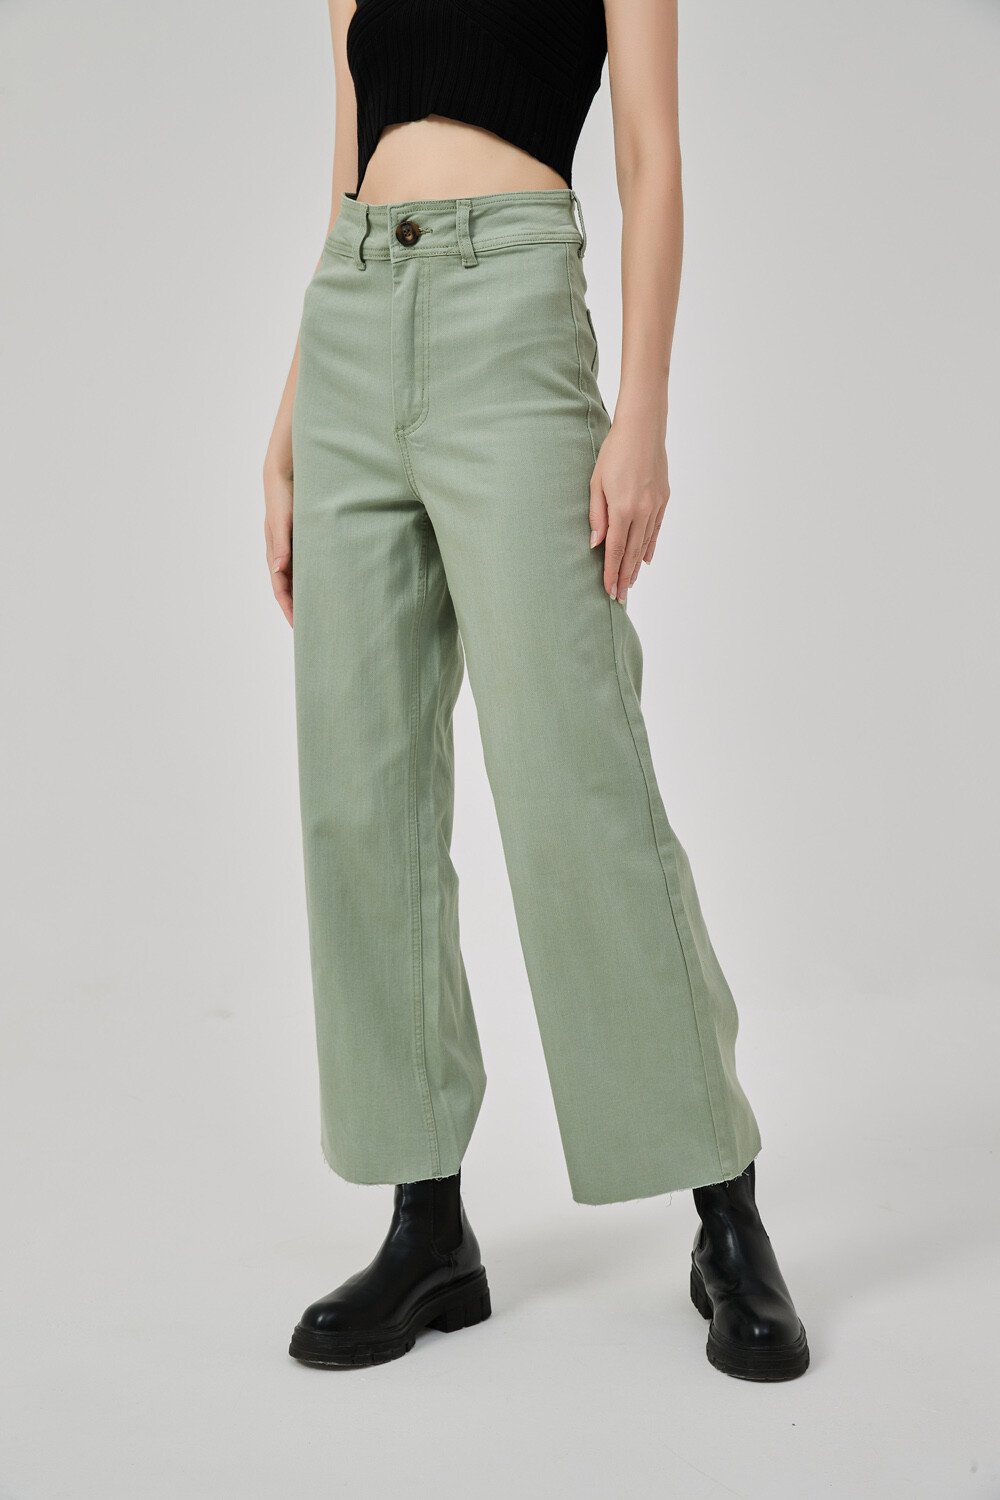 Pantalon Tesa Verde Claro